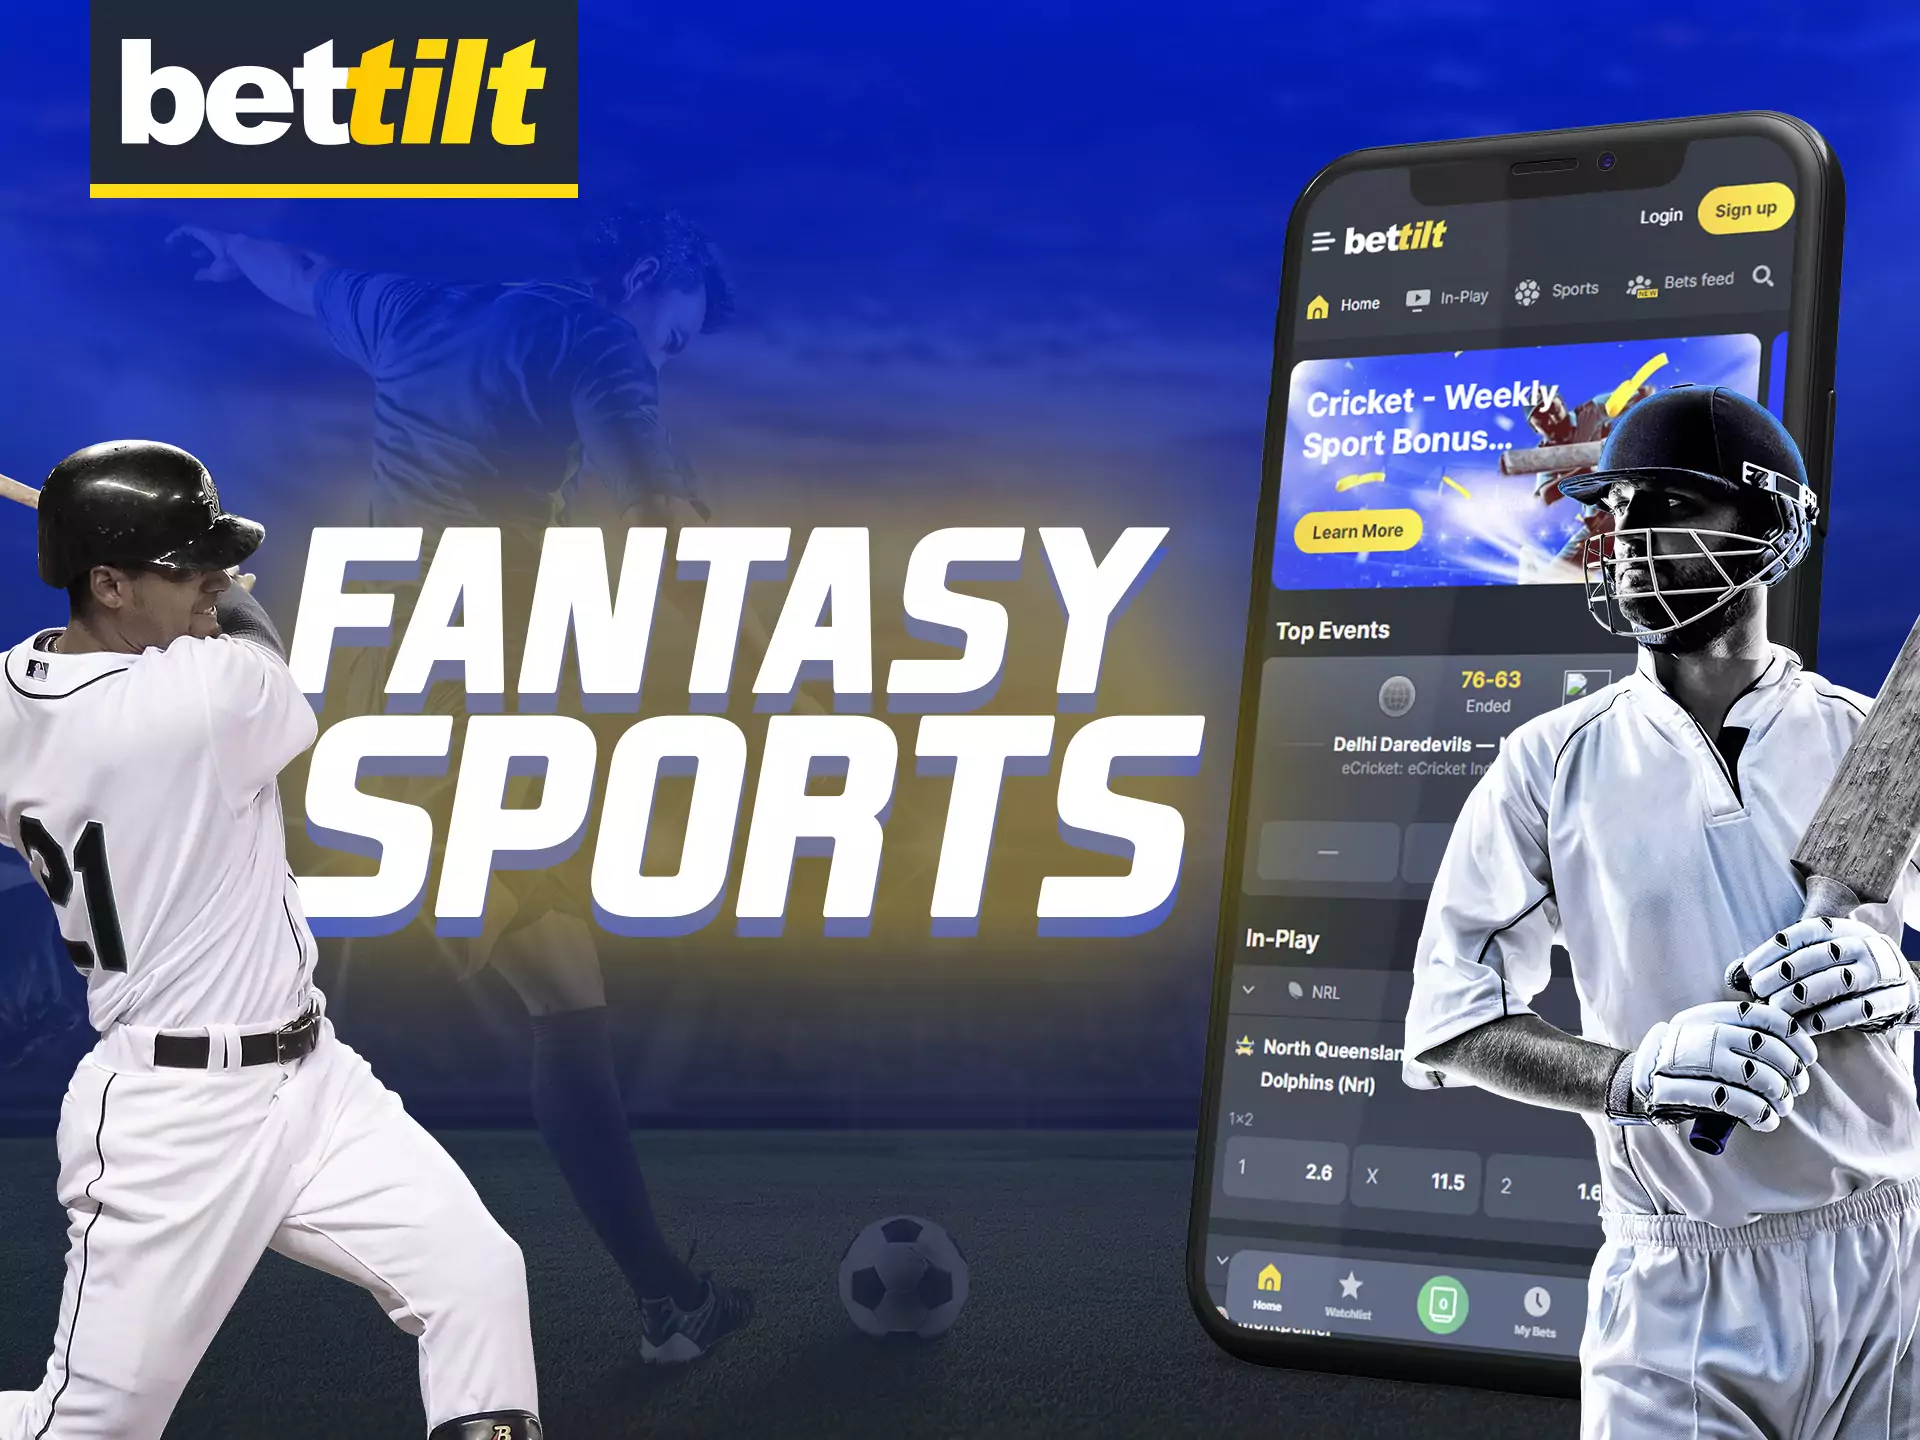 In the Bettilt app, bet on fantasy sports.